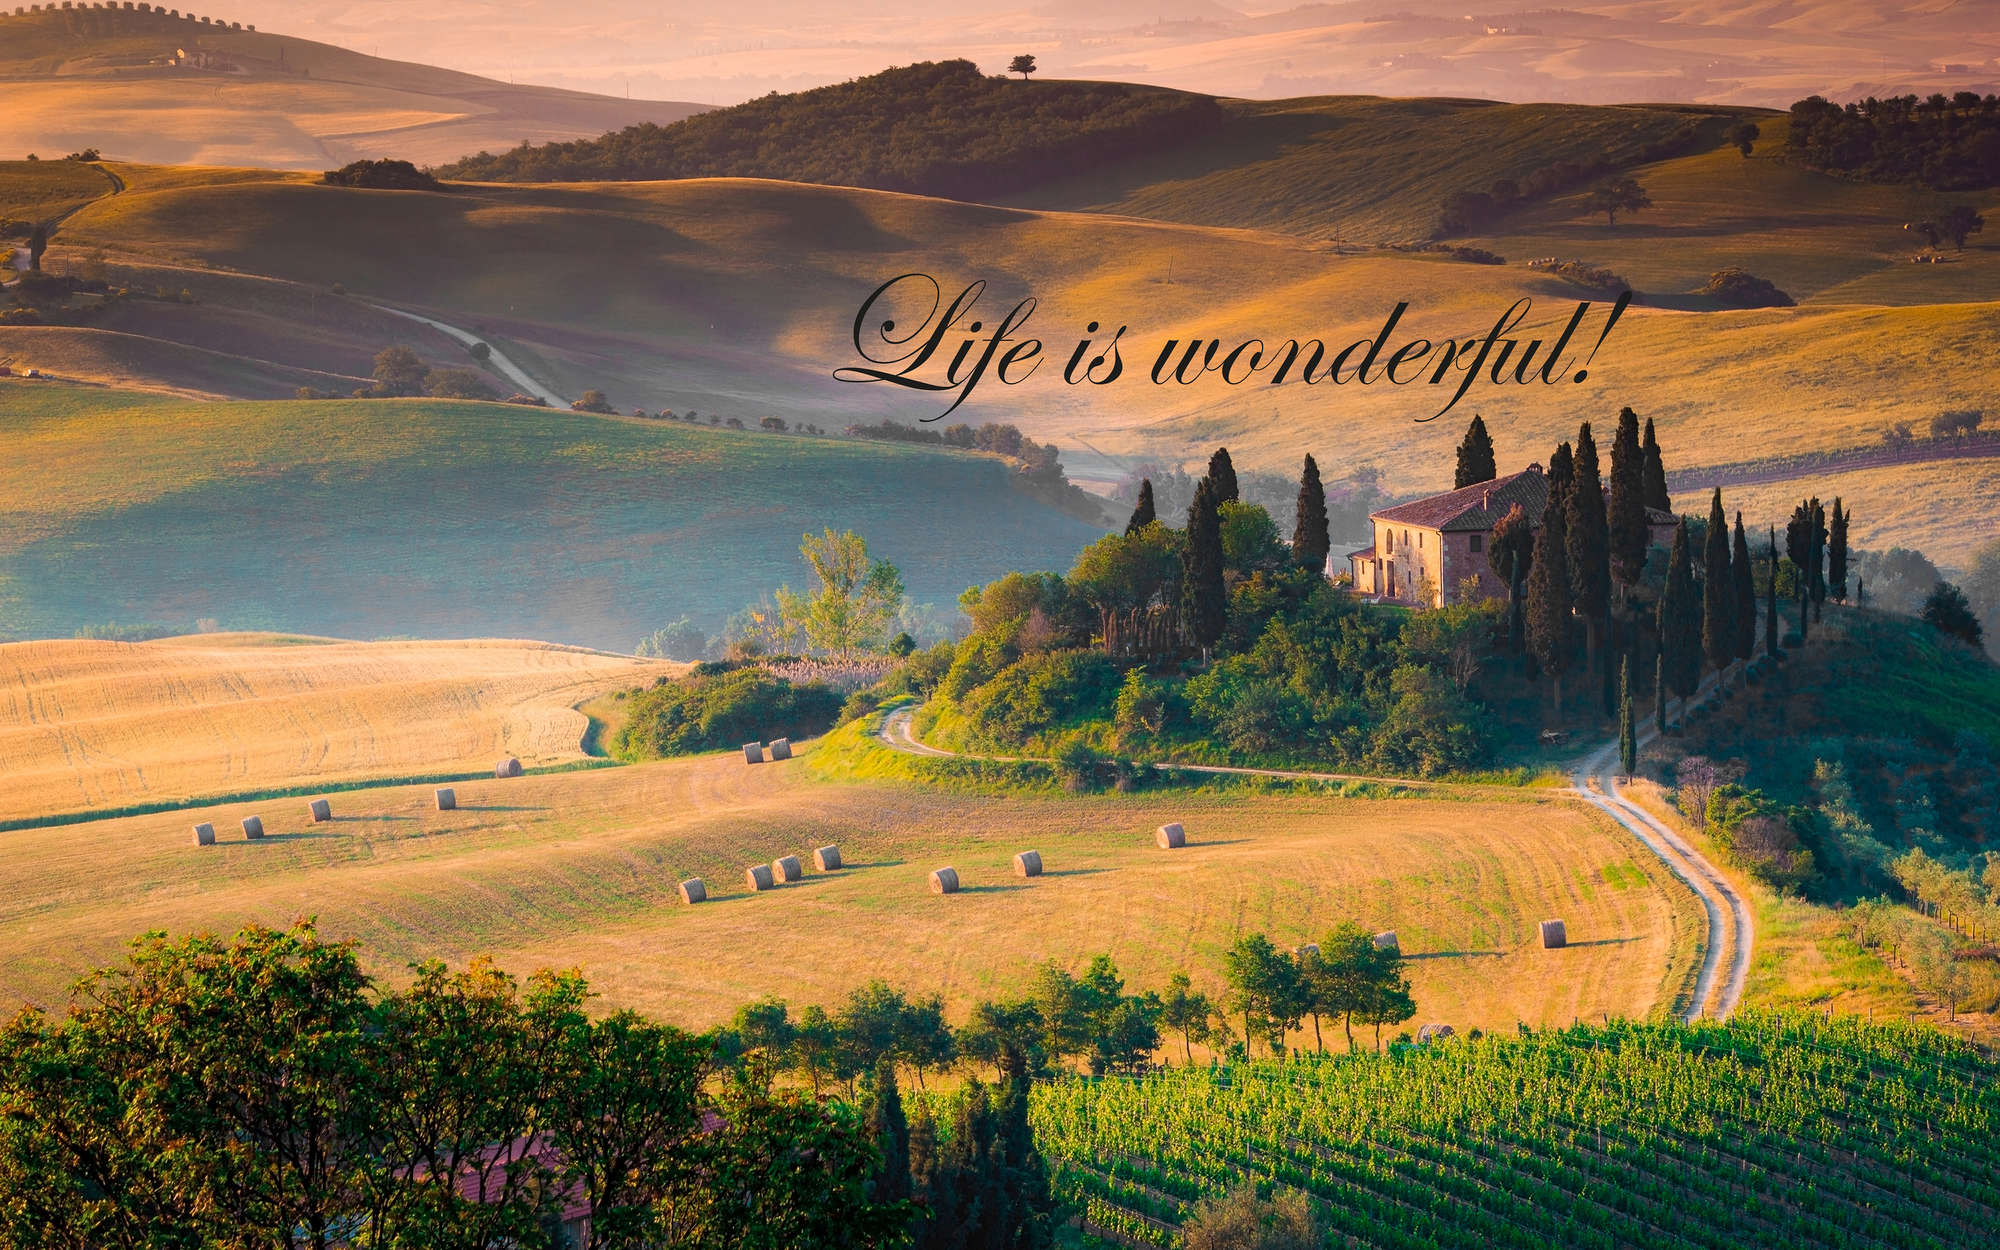             Fototapete Toskana mit Schriftzug "Life is wonderful!" – Mattes Glattvlies
        